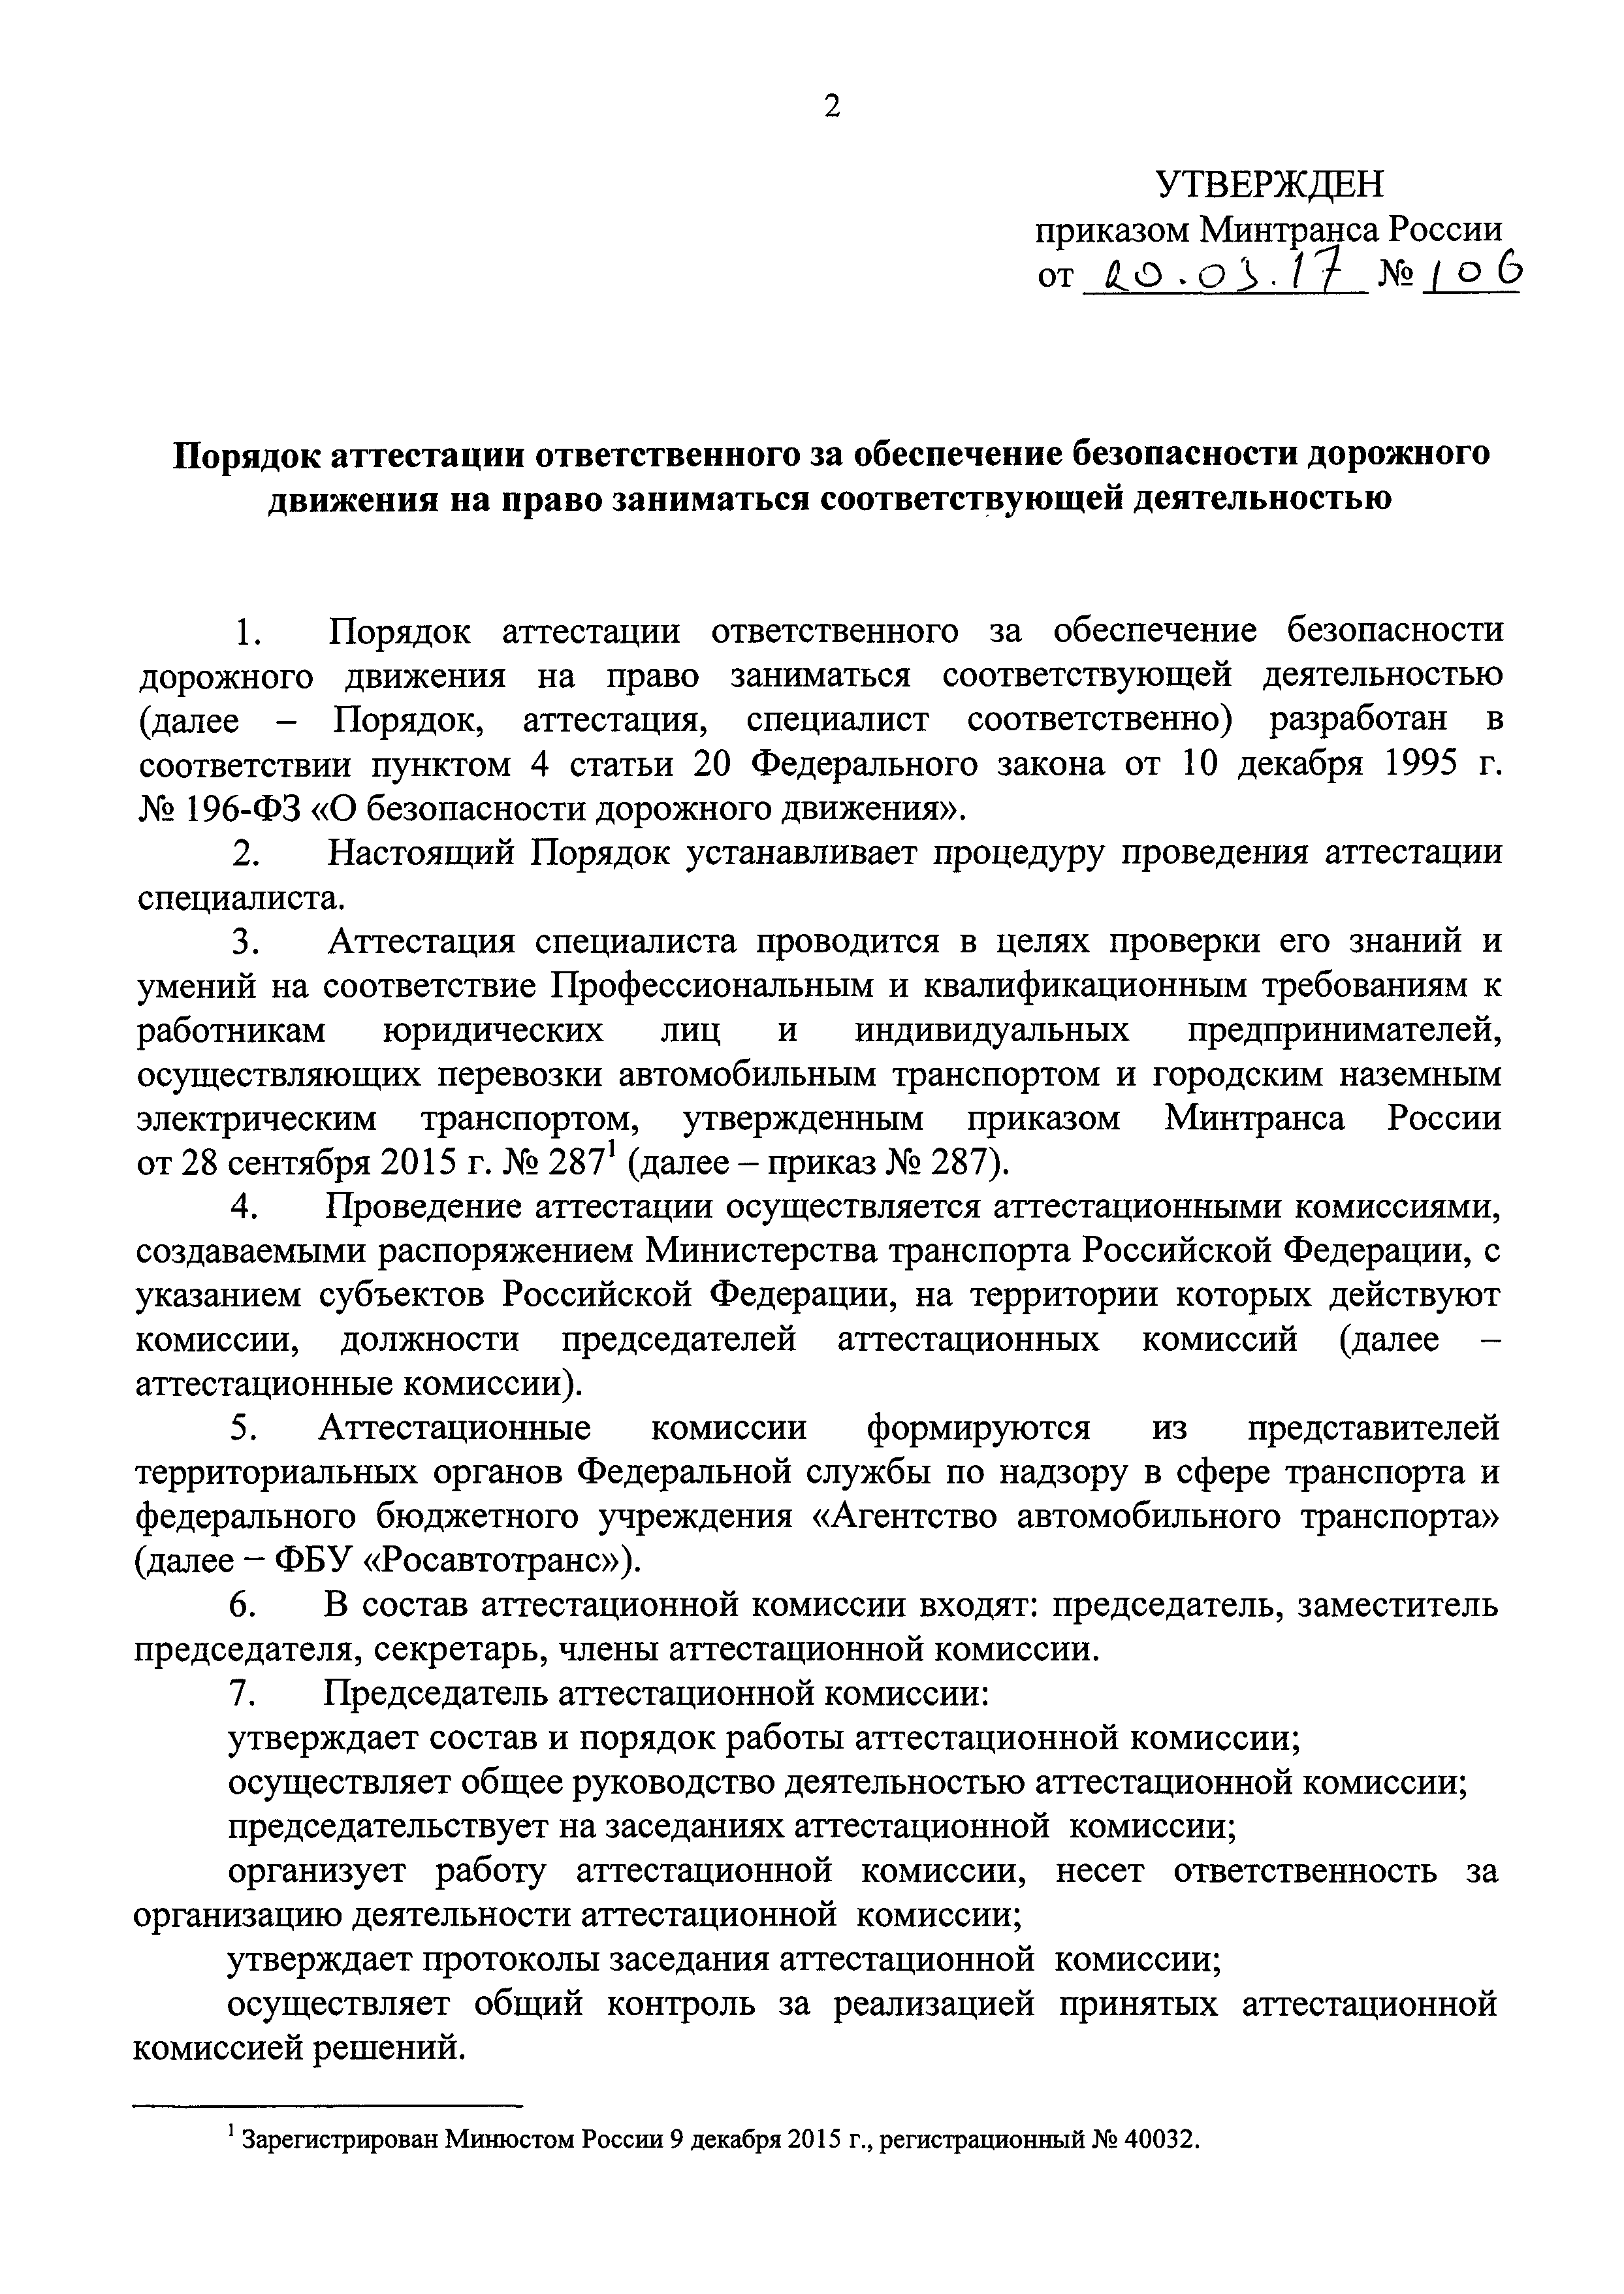 Приказ минтранса россии от 31.07